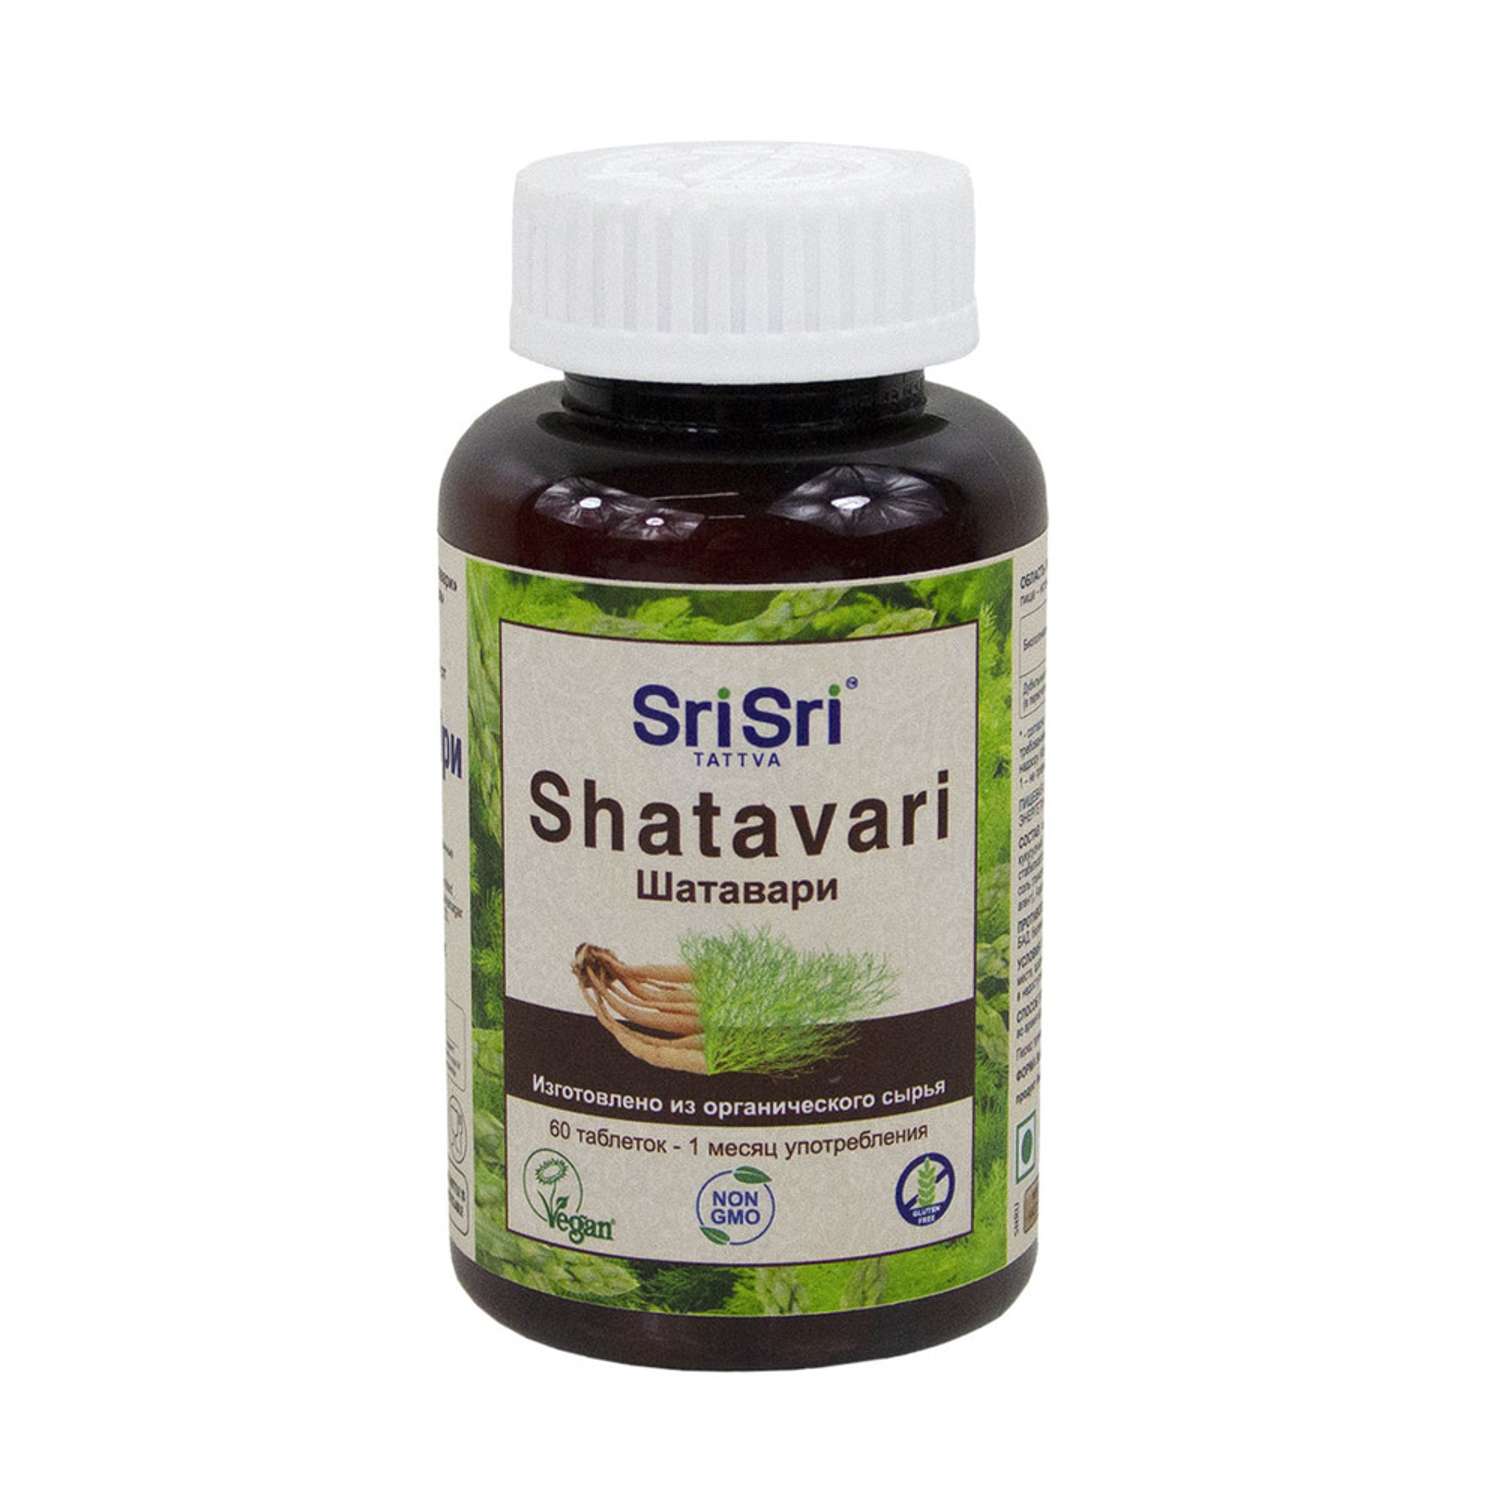 БАД Sri Sri Tattva Шатавари органические таблетки для женского здоровья 60 шт Индия - фото 1